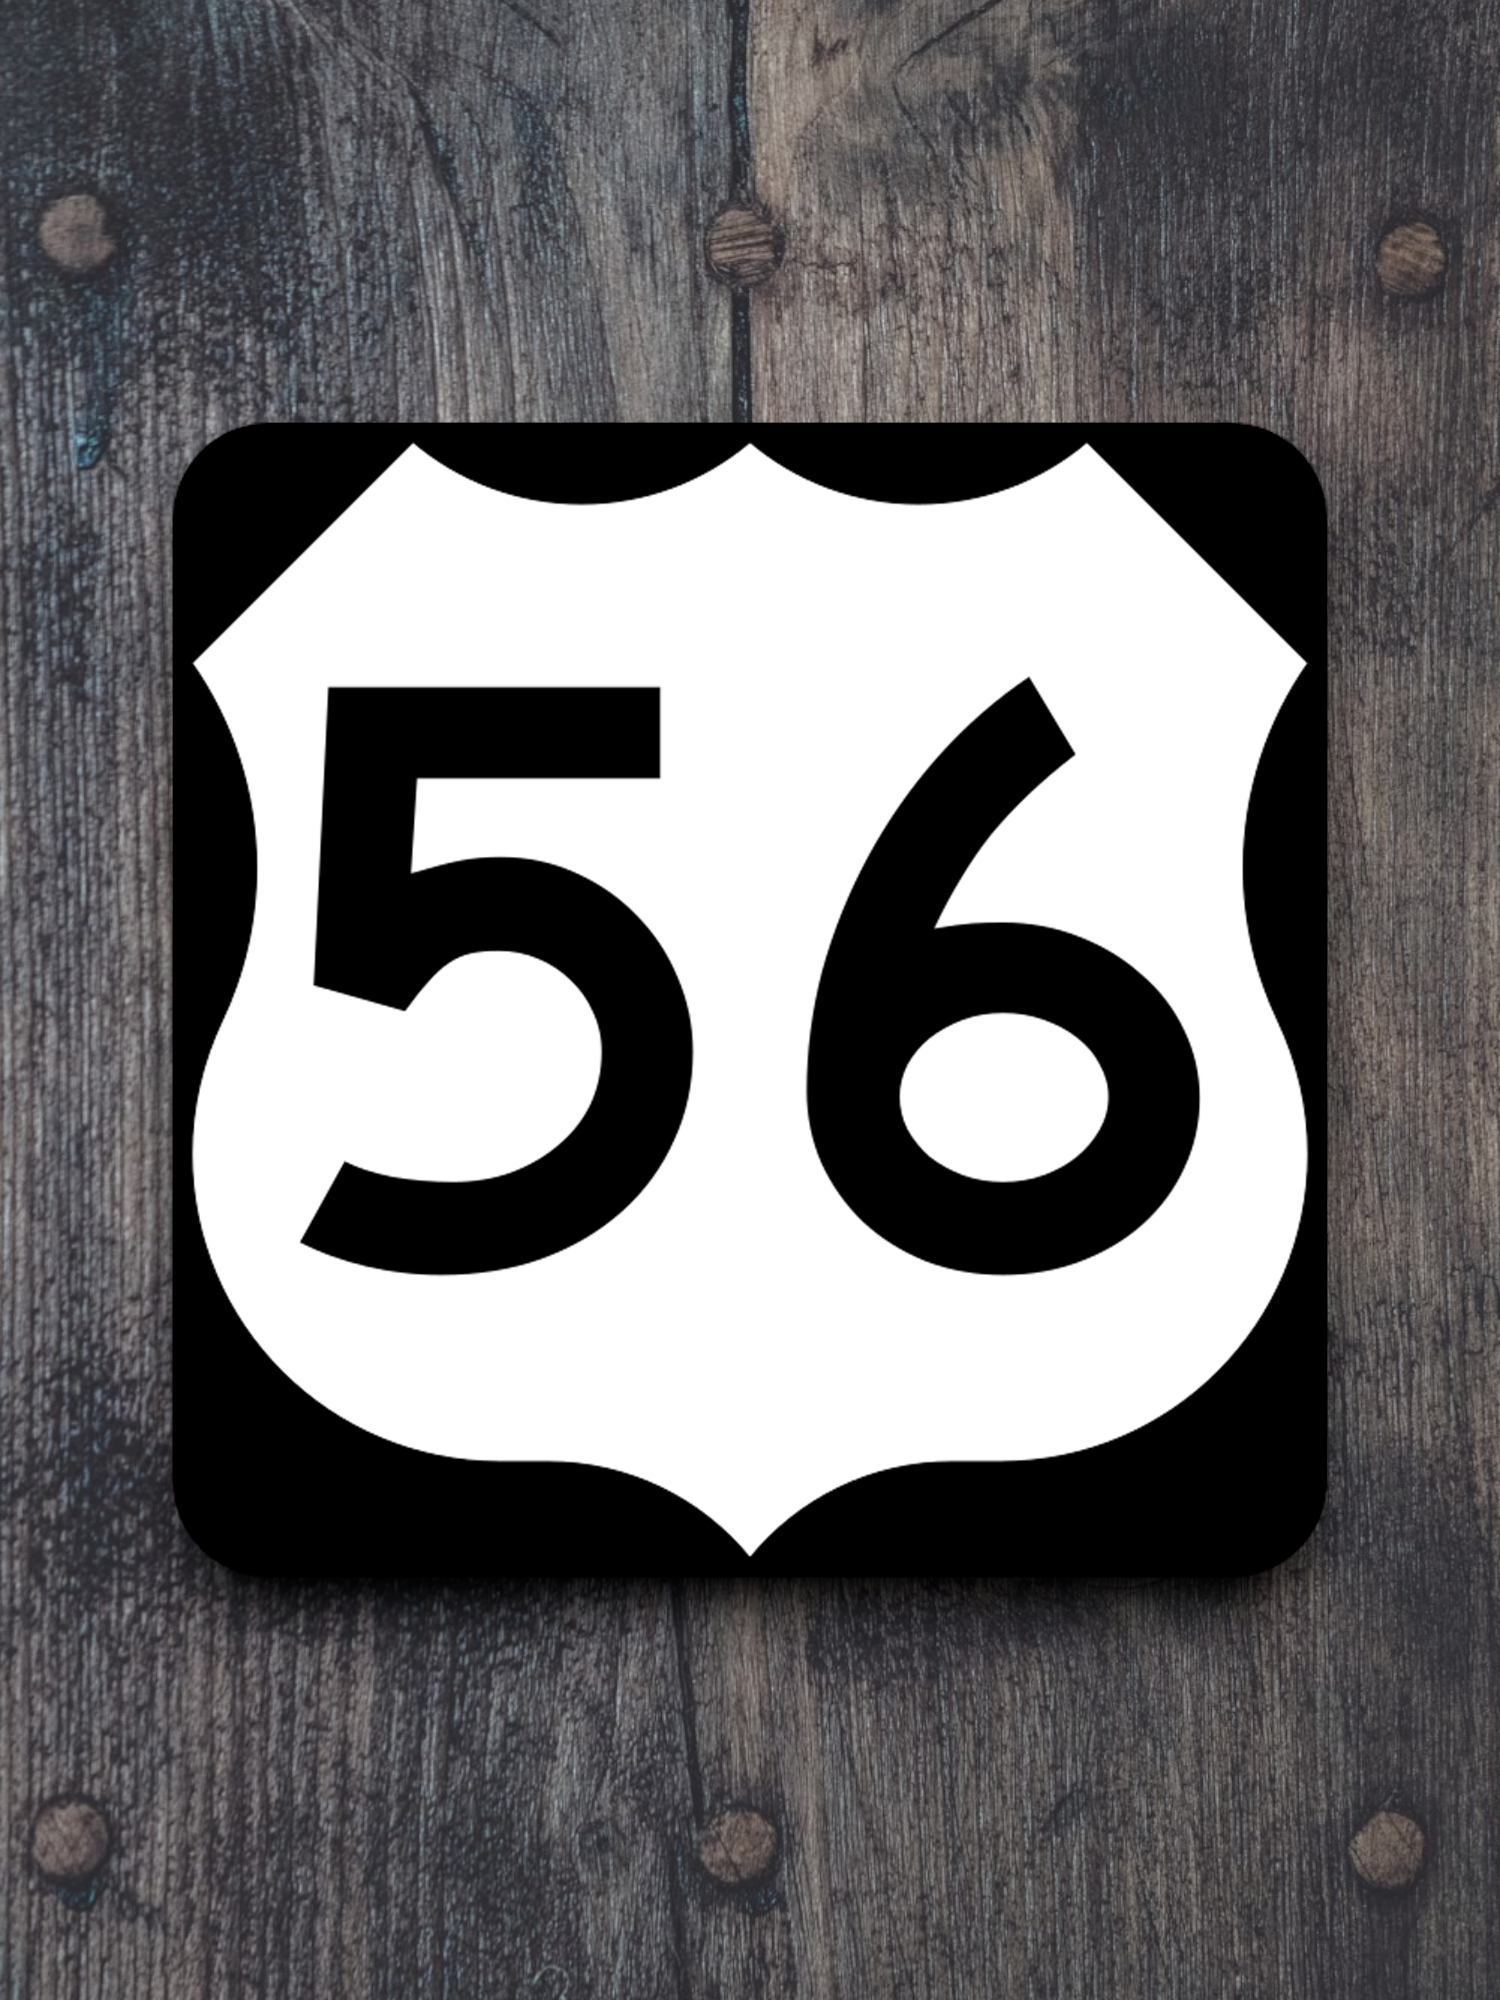 U.S. Route 56 Road Sign Sticker